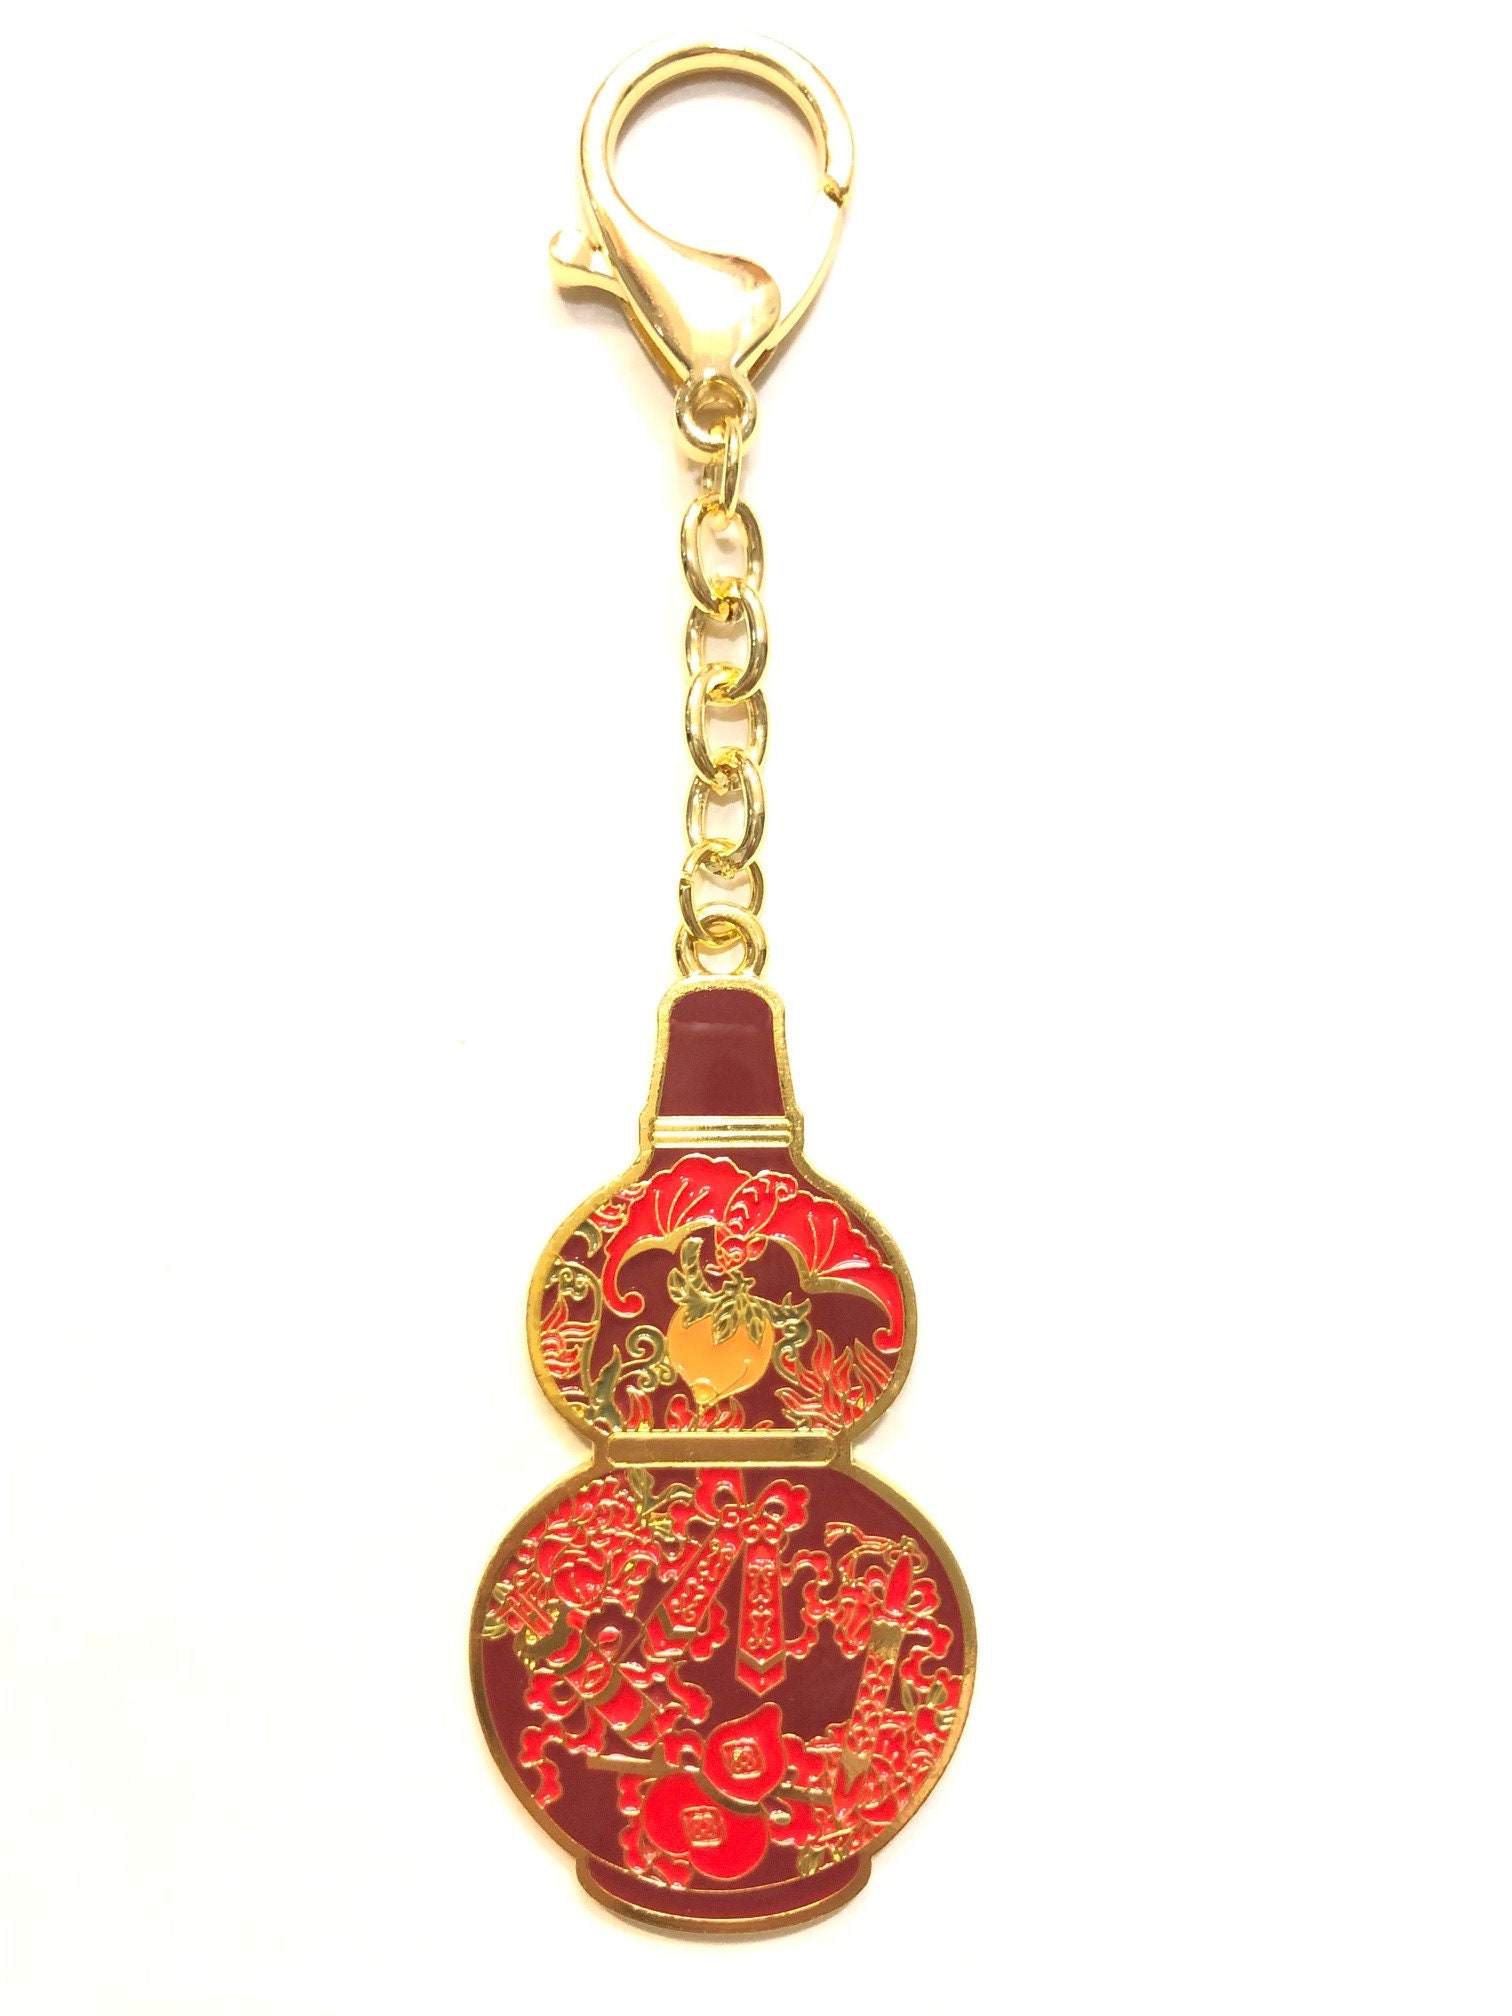 Decorative Chinese Feng Shui Wu Lou Talisman Black Beads Gift Amulet C